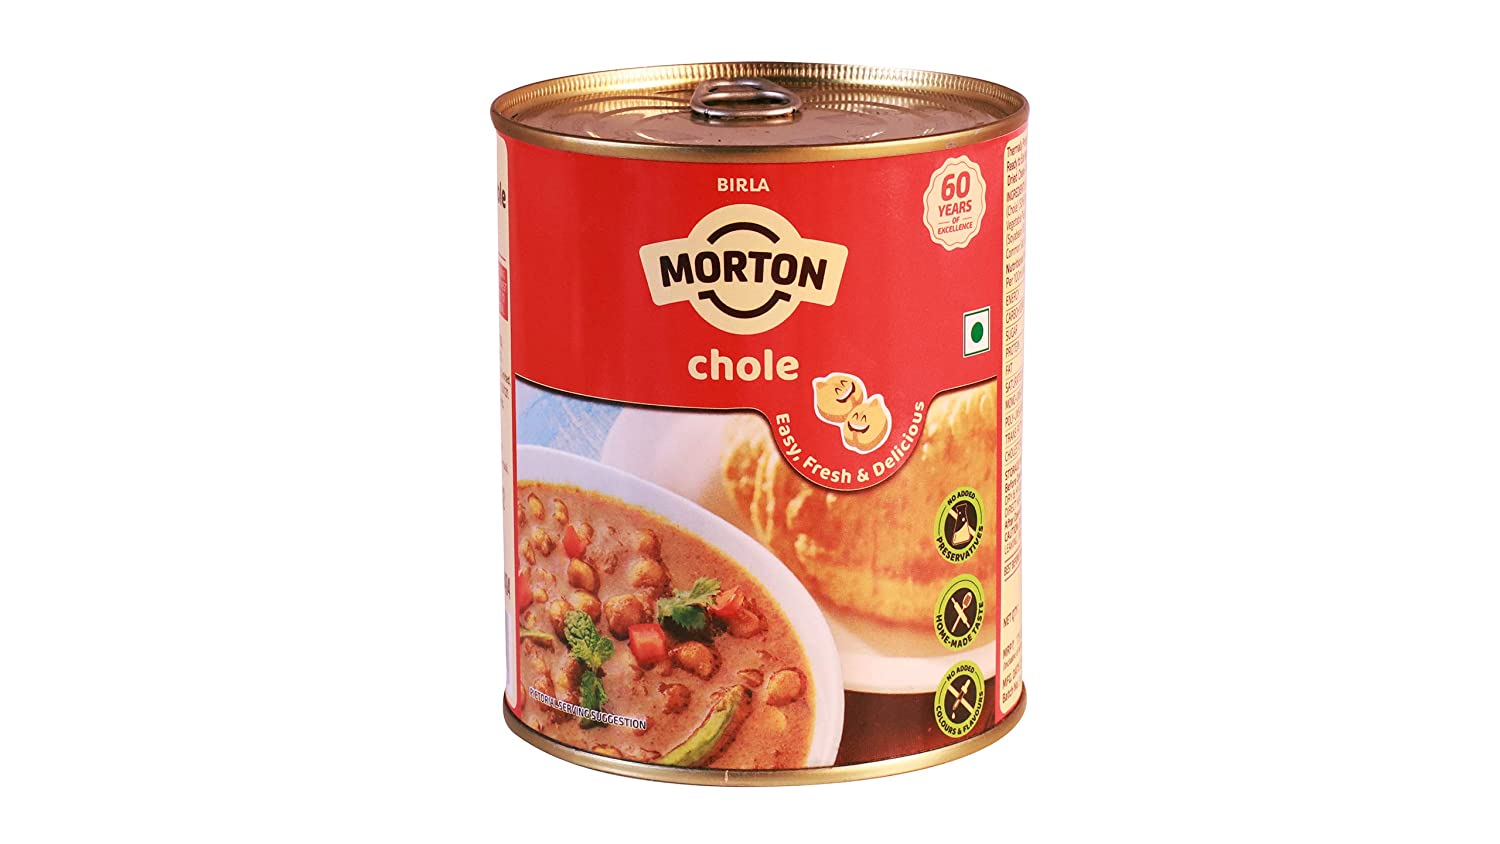 Morton Ready to Eat Chole Image